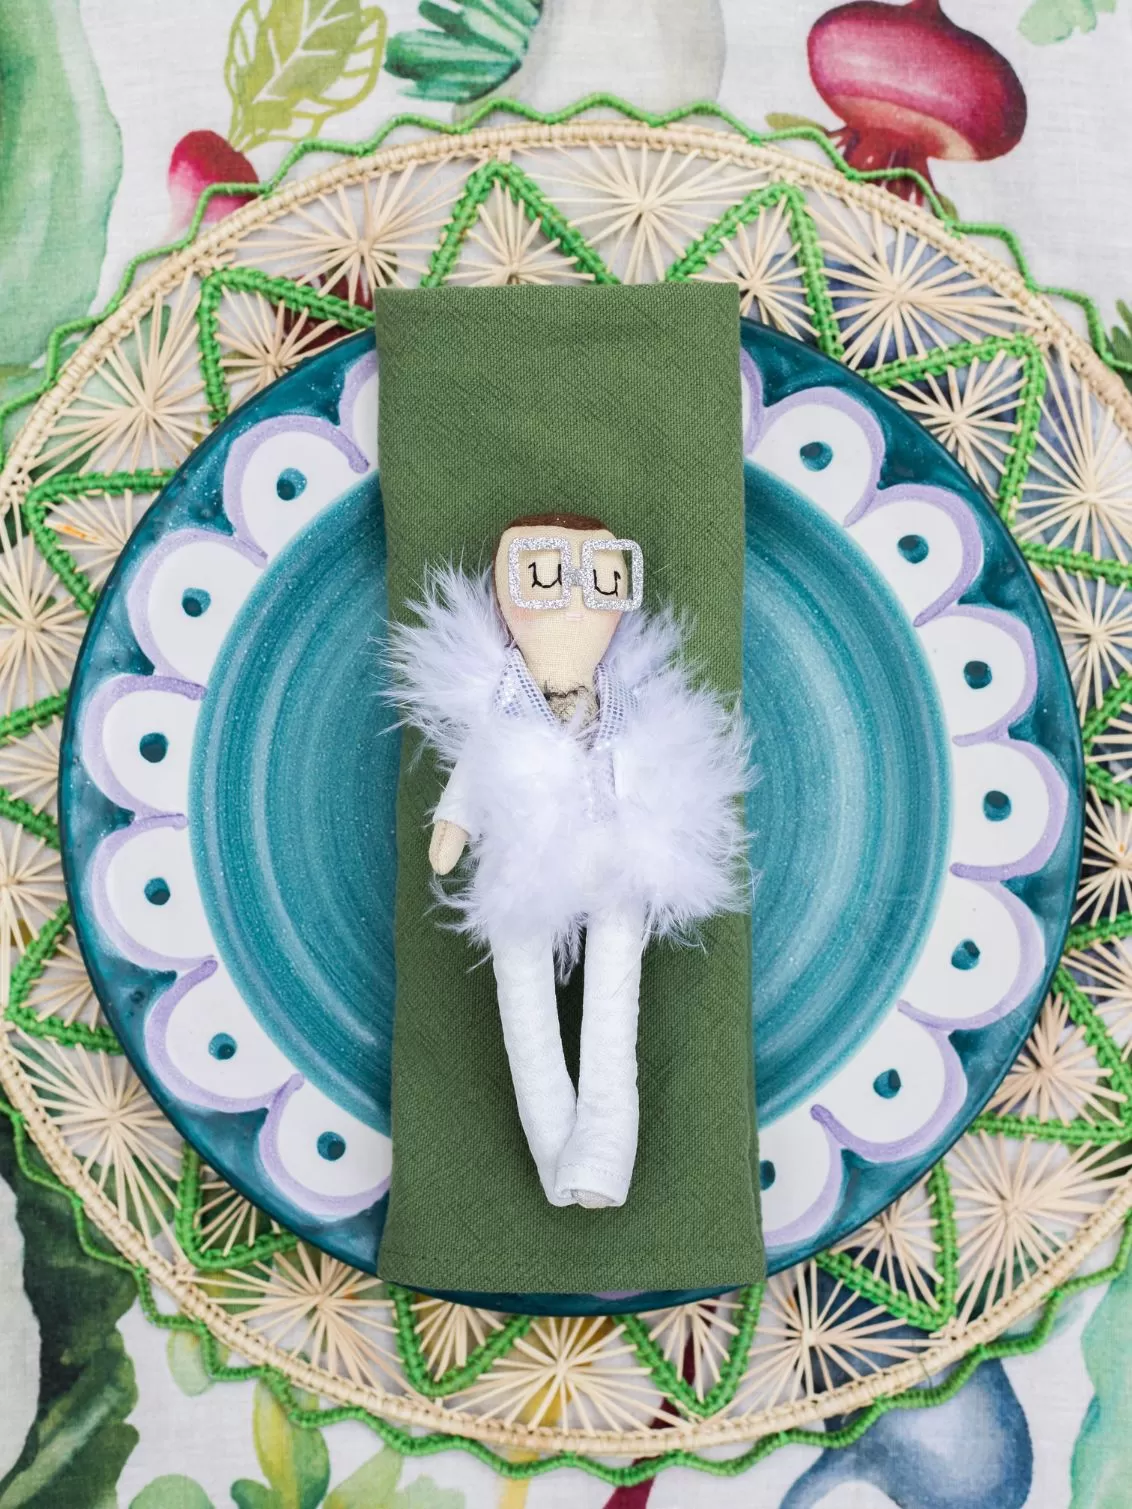 Elton John Jennifer Jackson doll seen on a table setting.